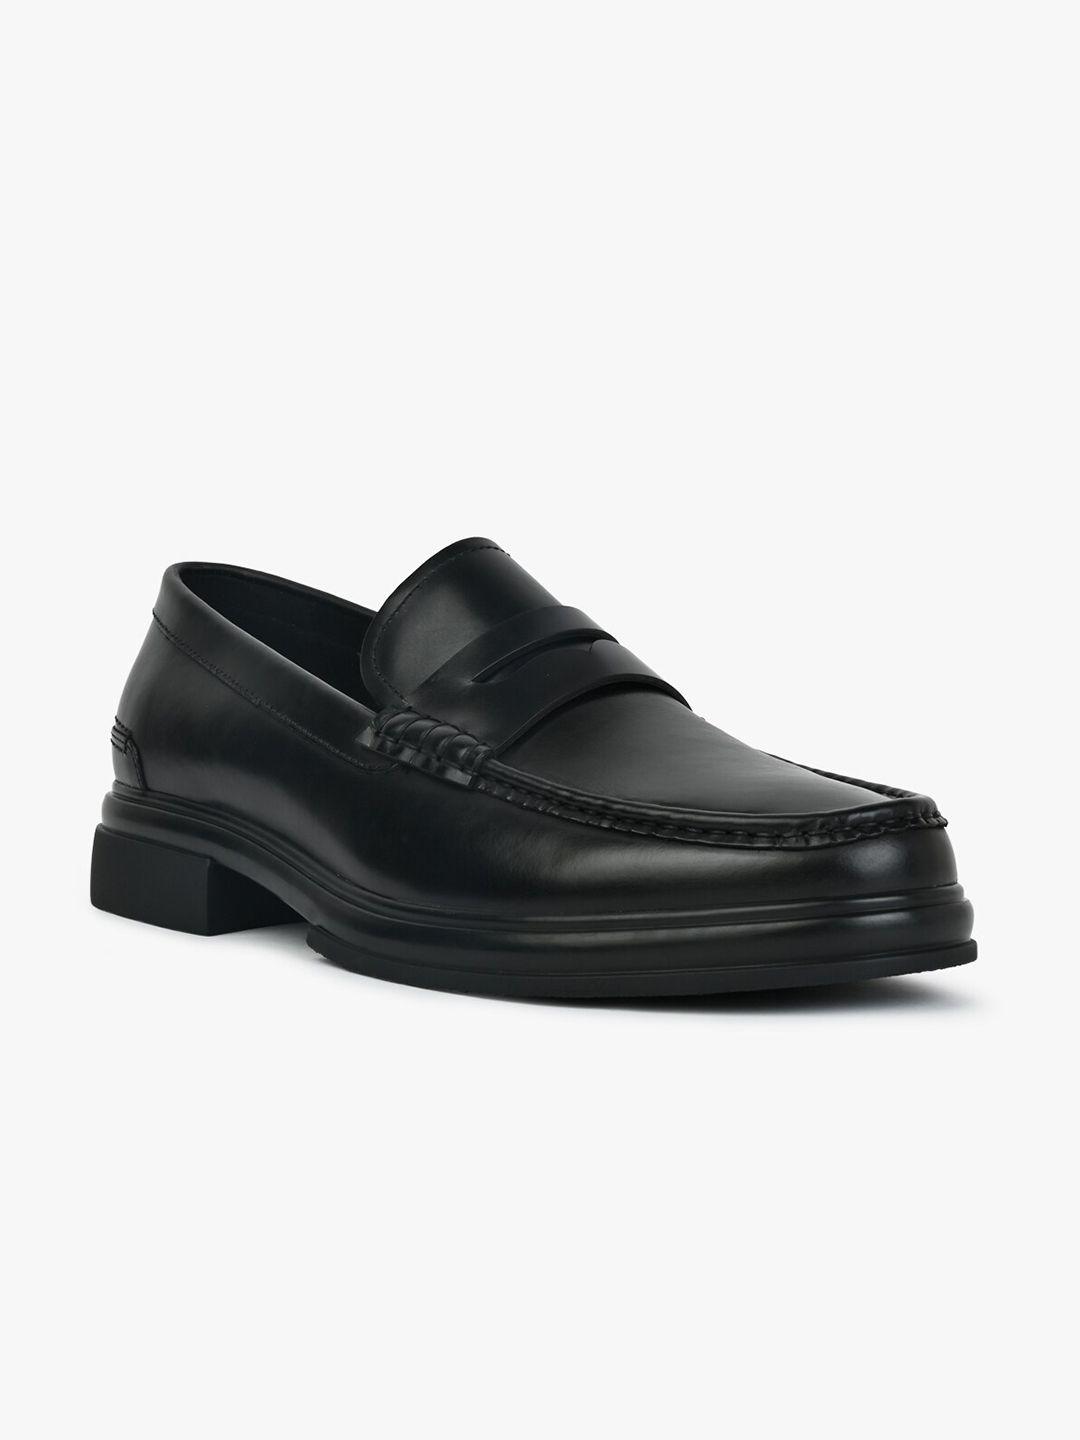 ALDO Men Round Toe Leather Formal Loafers